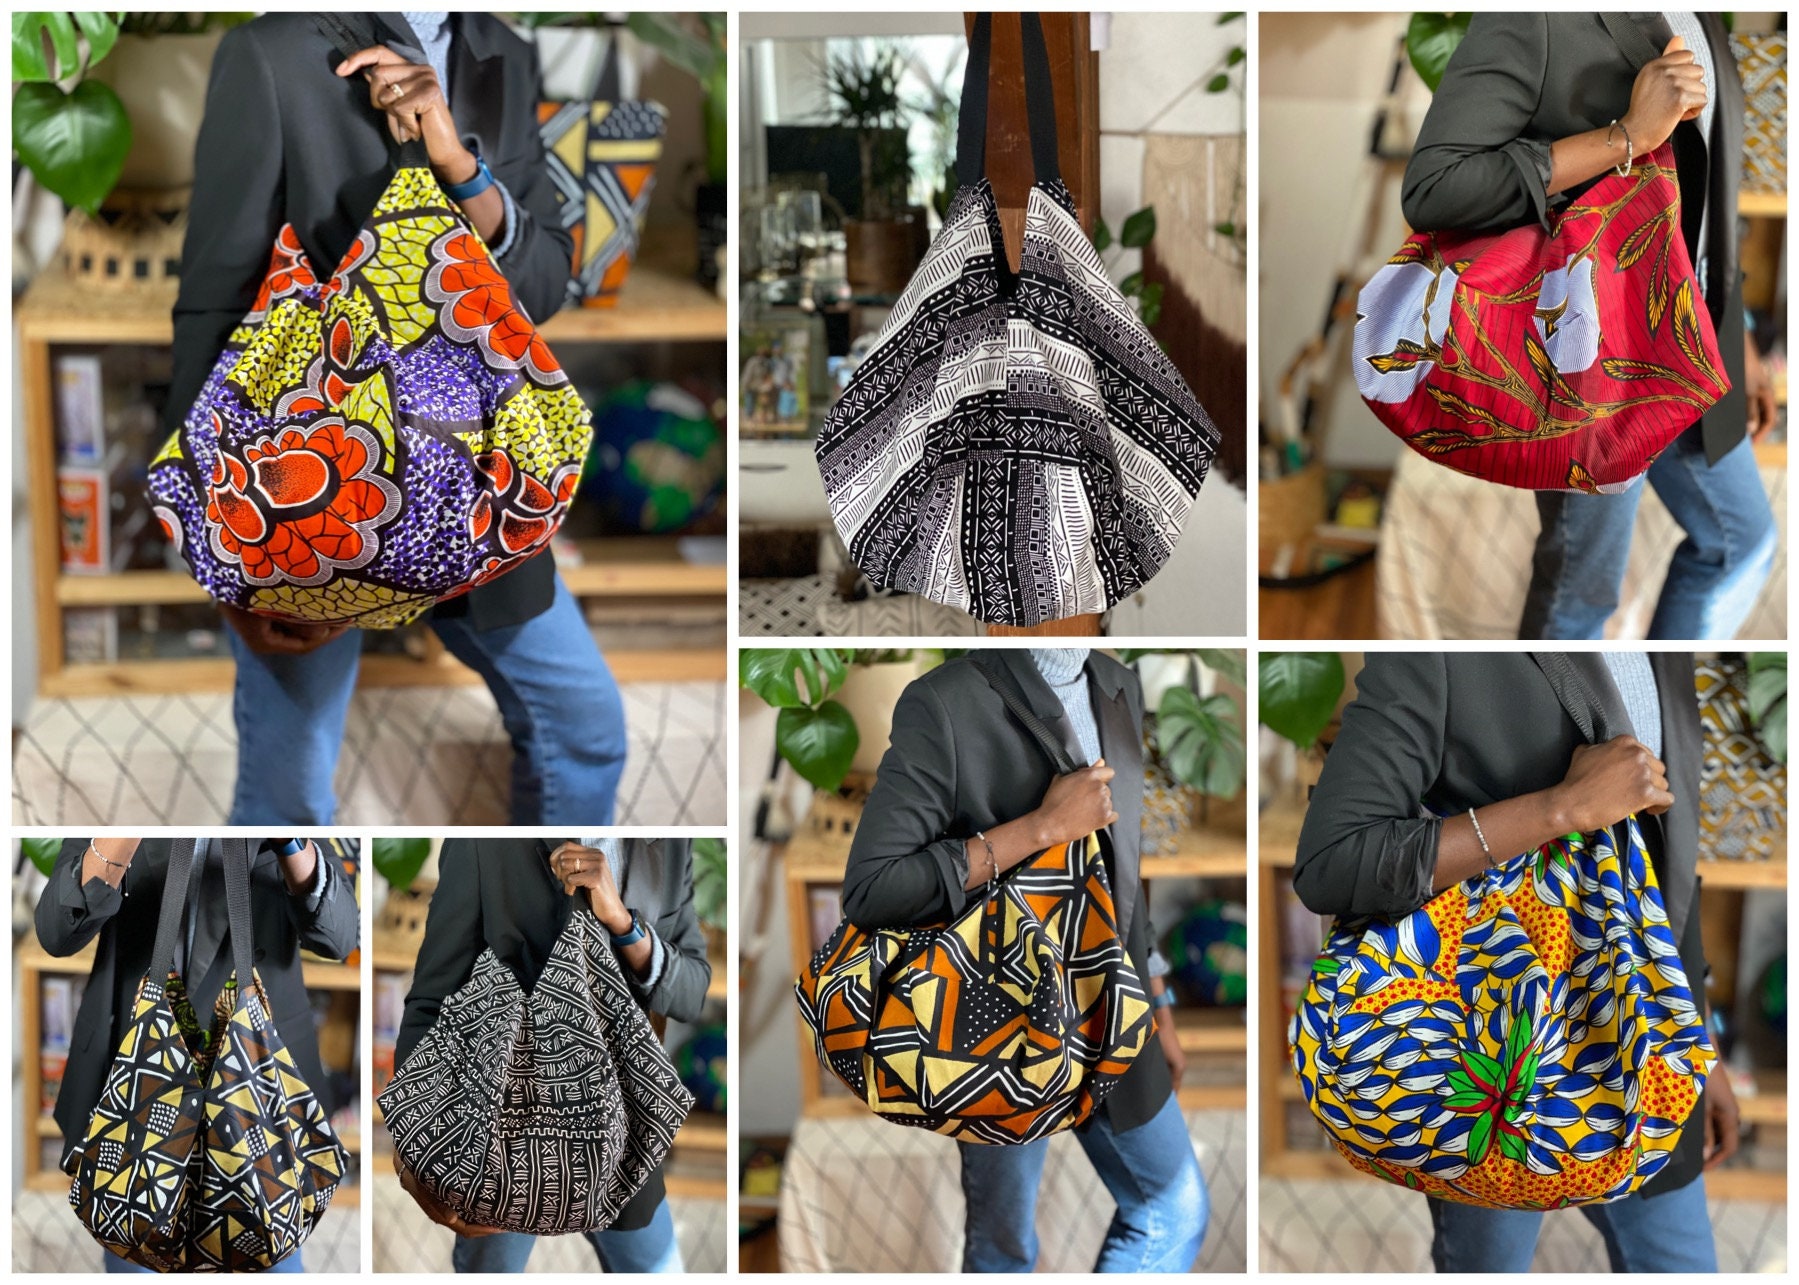 Rope Handle Tote Bag For Women Fashion Geometry Handbag Triangle Fold  Design PU Leather Shoulder Bag Girls Mini Crossbody Bag